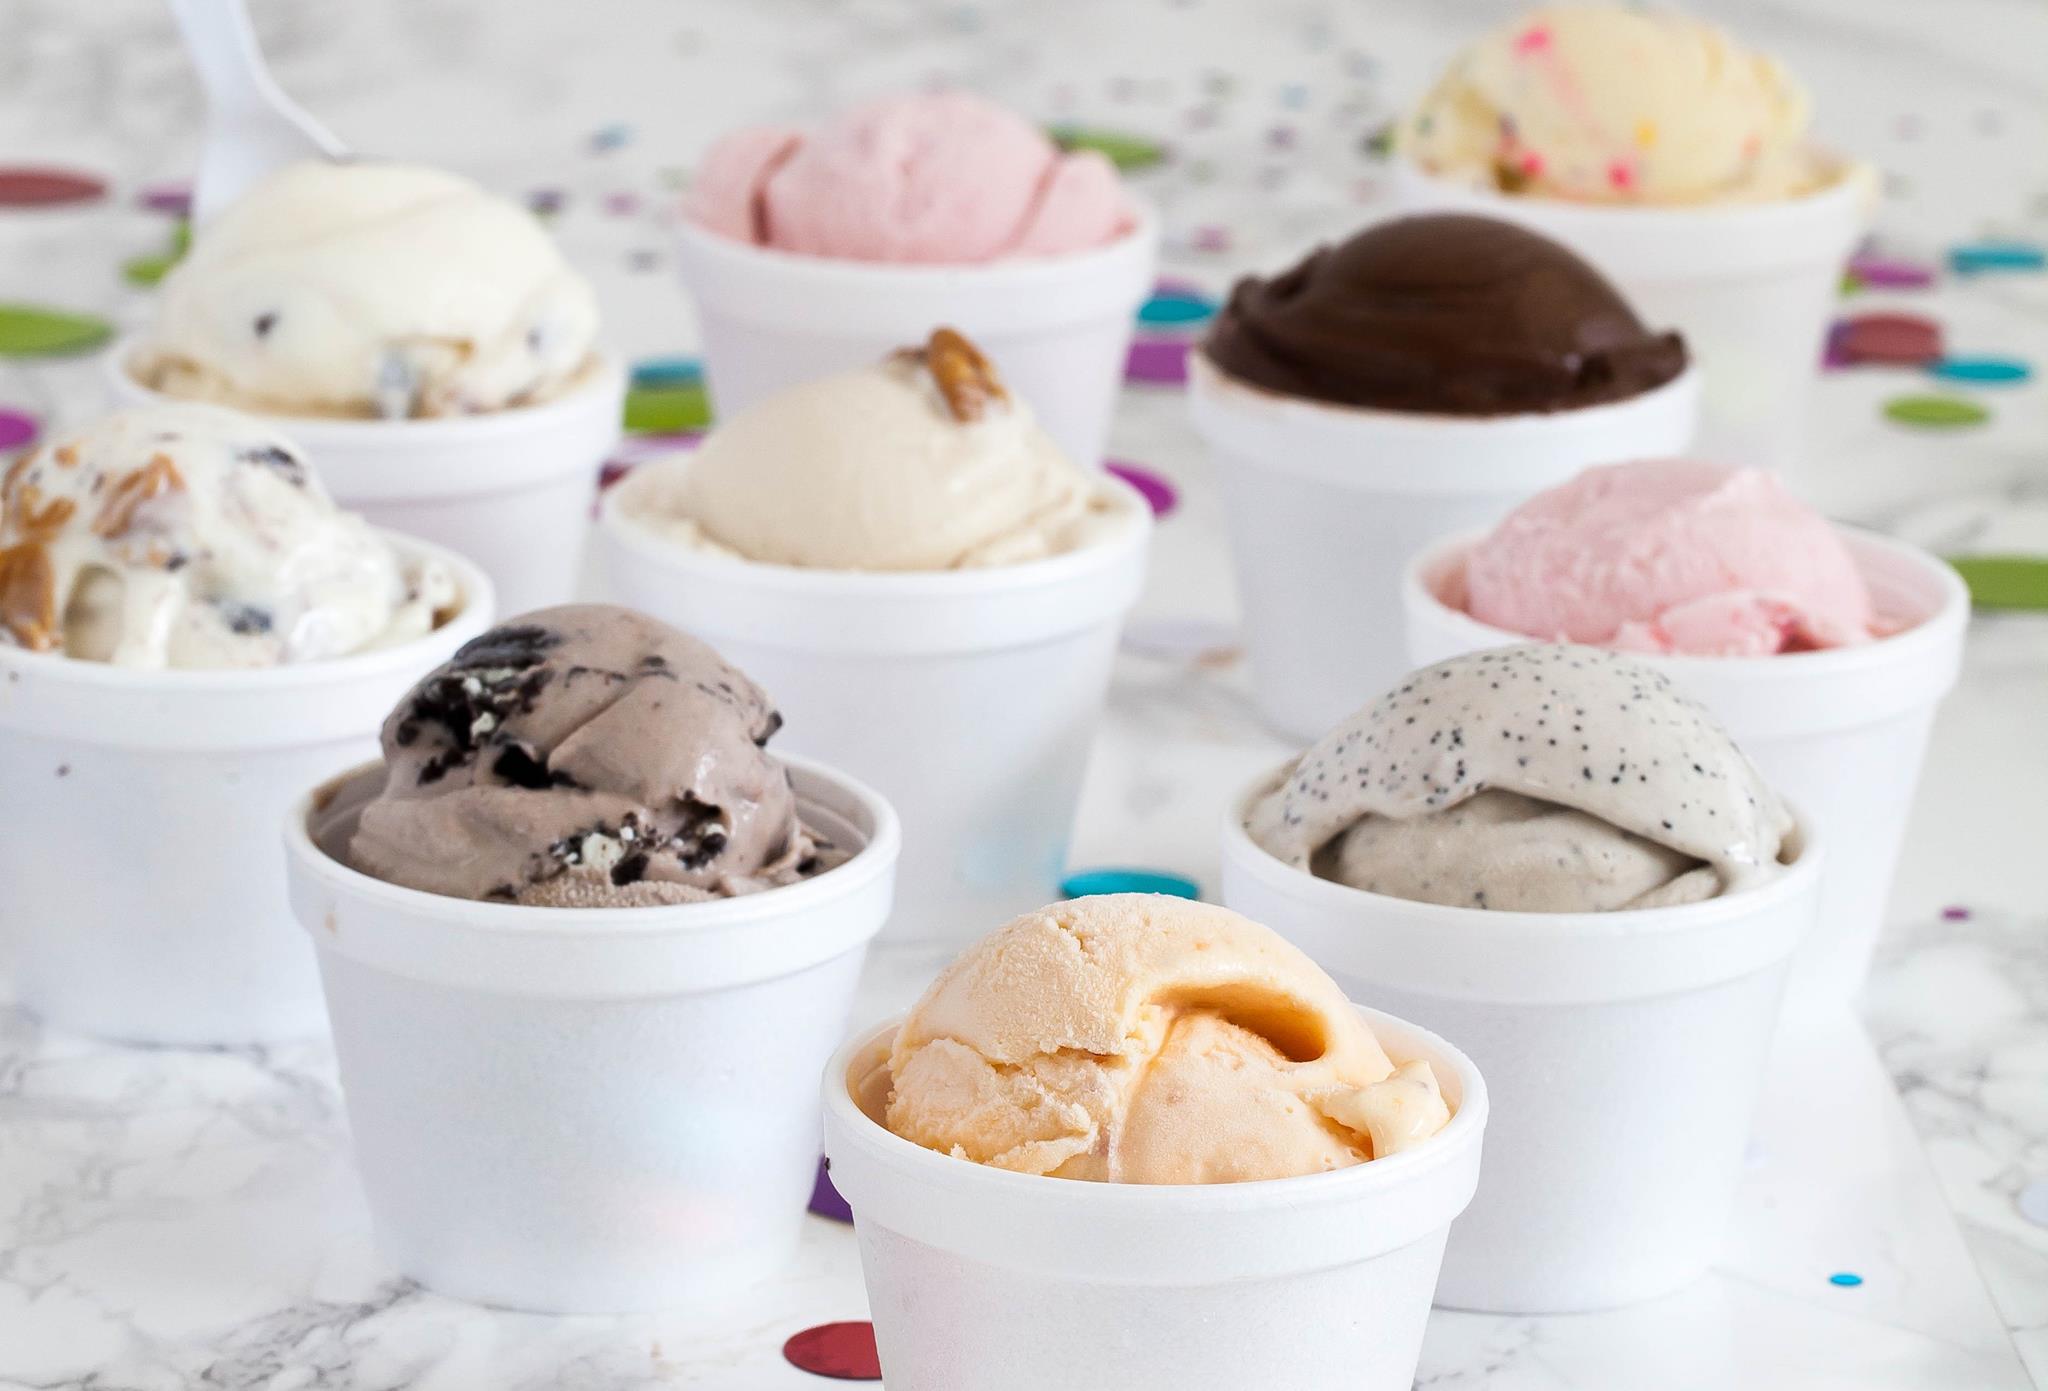 Gelati Celesti Ice Cream Opens in Virginia Beach